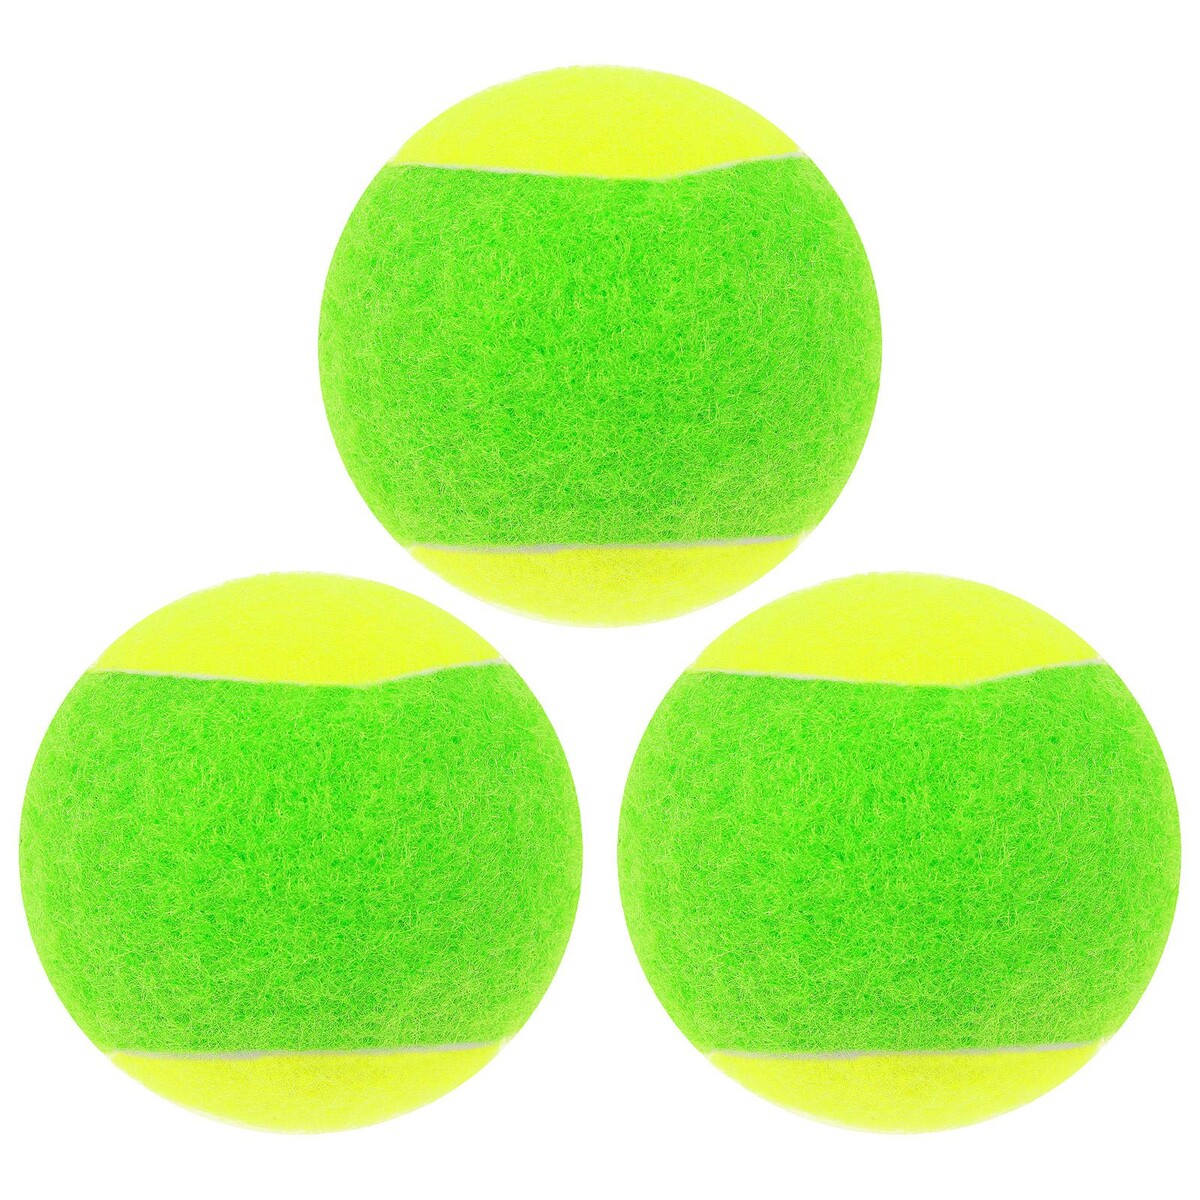 Набор мячей для большого тенниса onlytop swidon, 3 шт. ракетка для большого тенниса wish alumtec jr 21’’ 2900 голубой